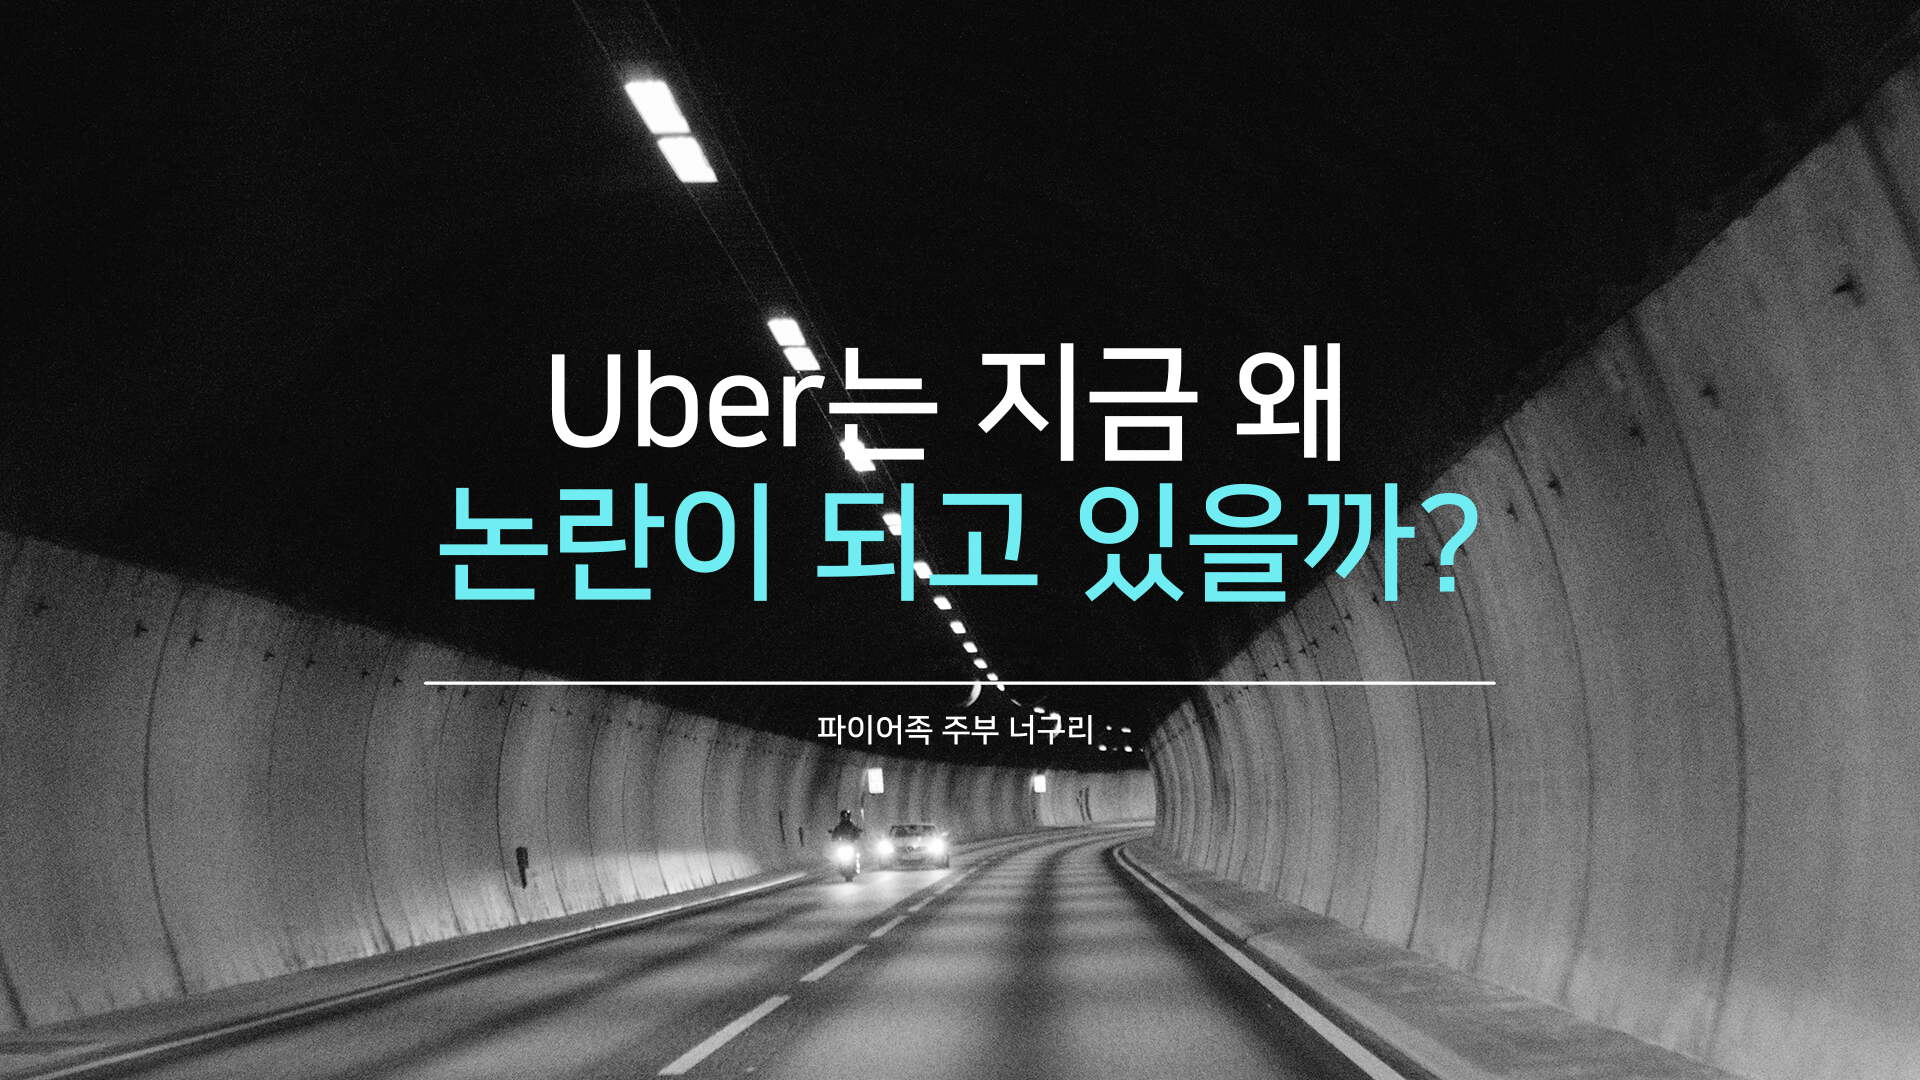 Uber는 지금 왜 논란이 되고 있을까?